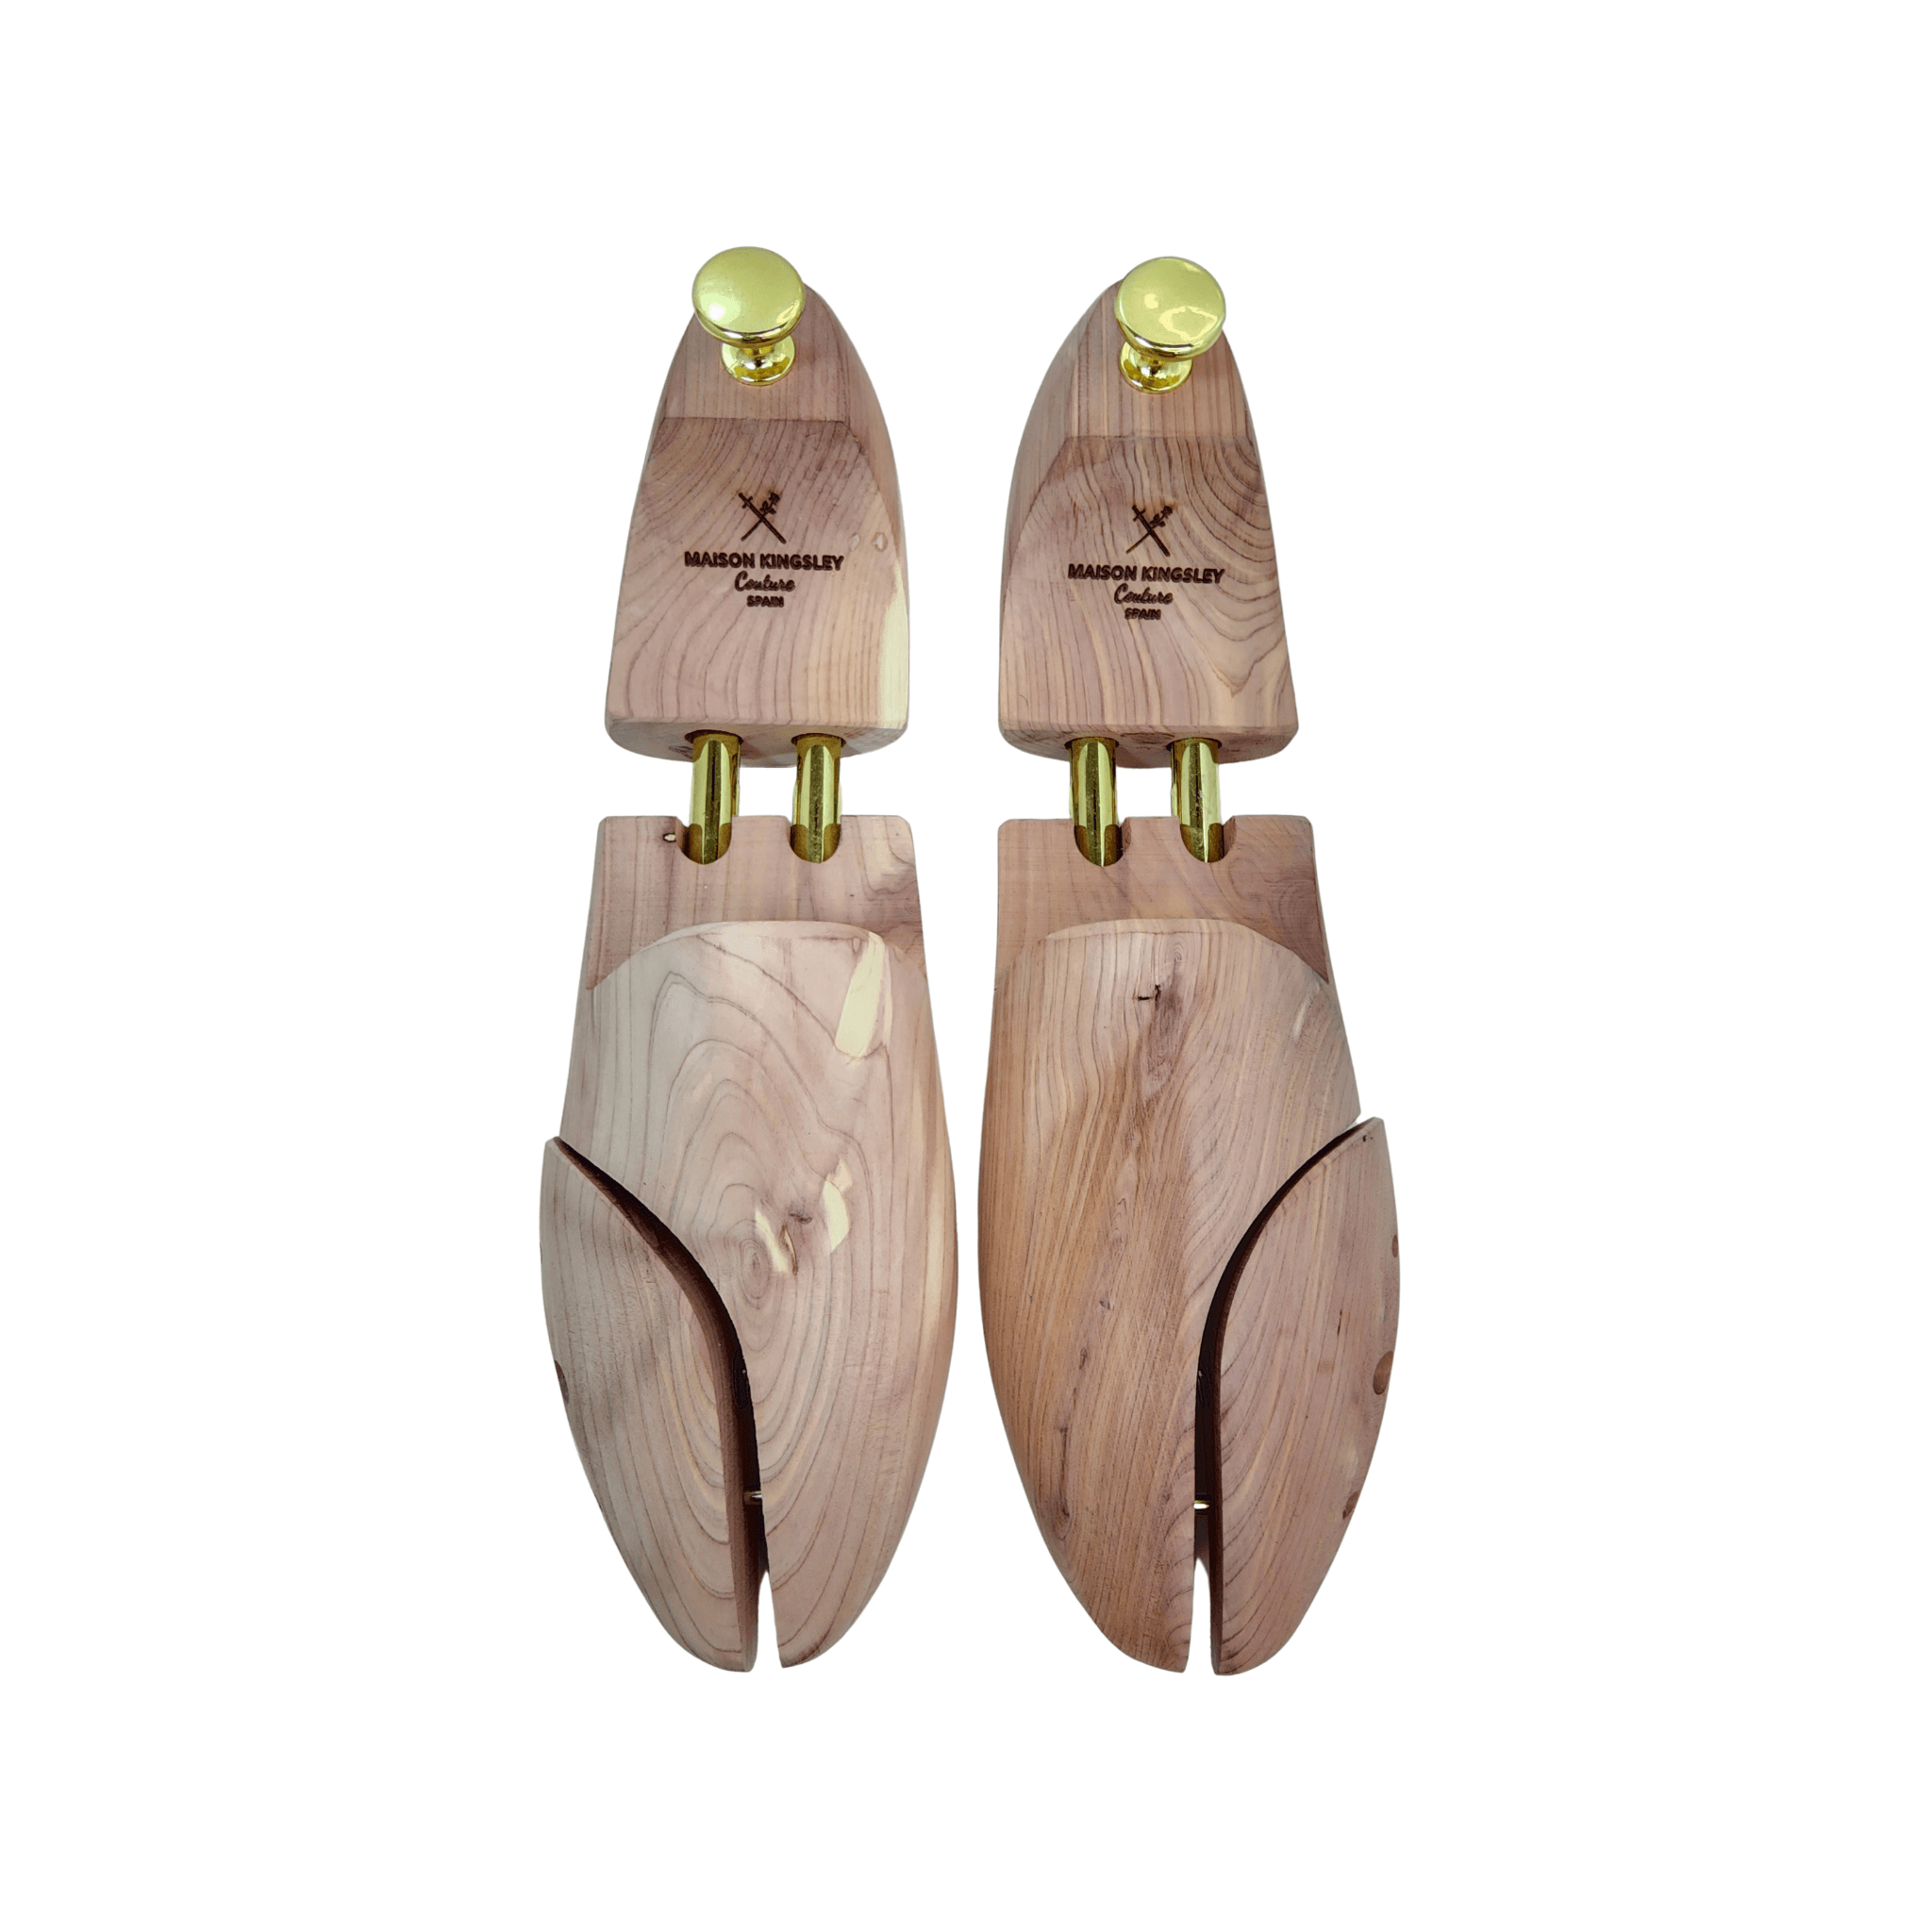 Men's Jodhpur Boots in Khaki Green Patina and Suede with Toe Taps - Maison de Kingsley Couture Harmonie et Fureur Spain